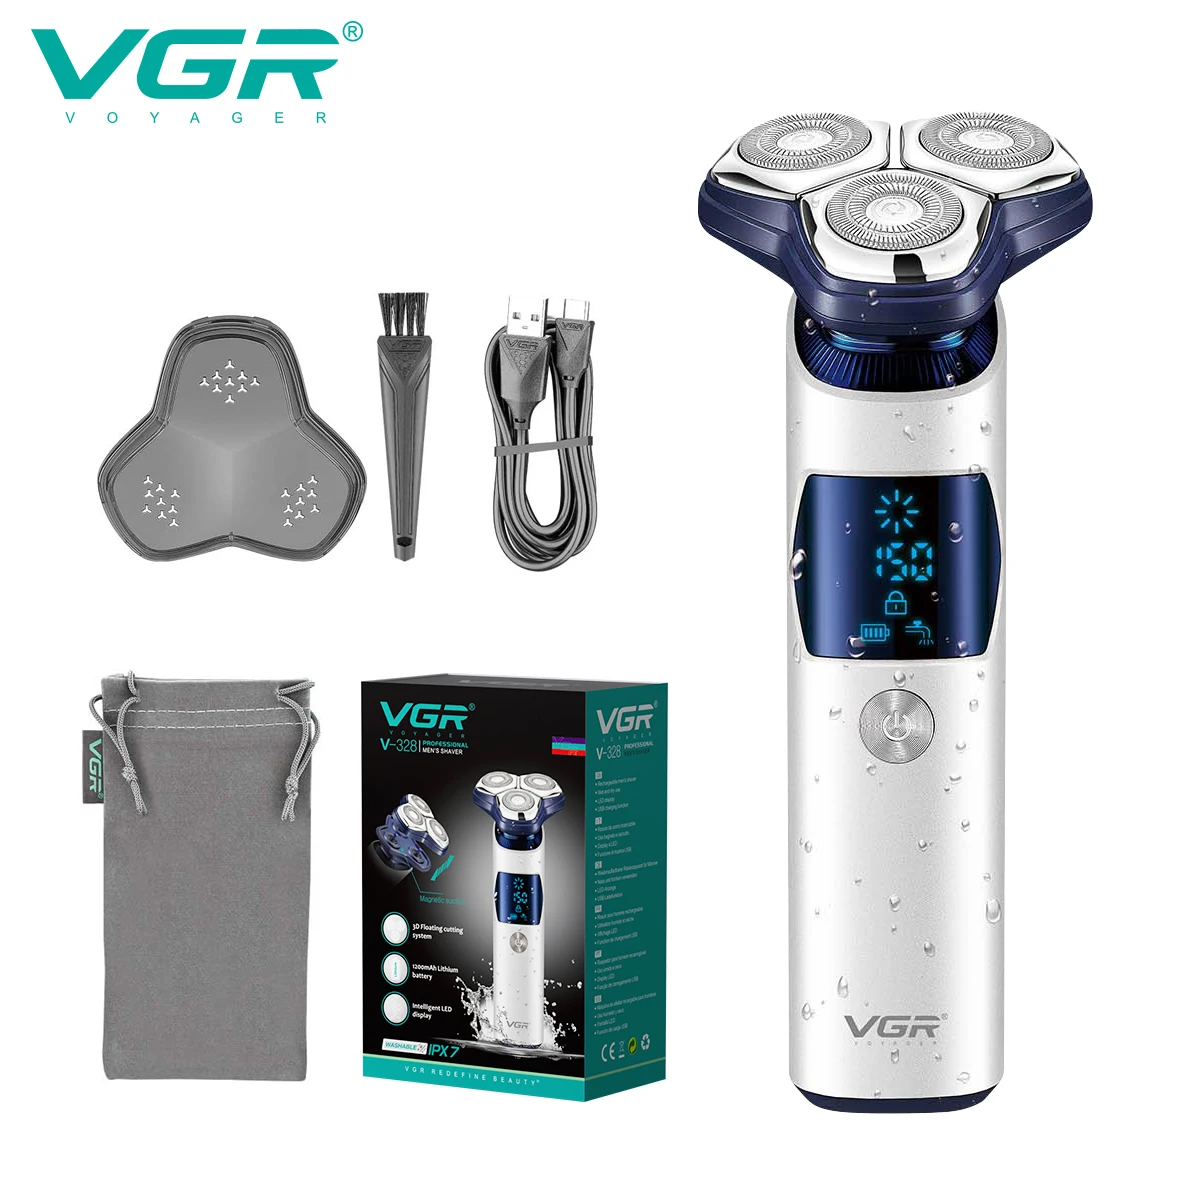 

VGR Shaver Electric Razor Waterproof Beard Trimmer Professional Shaving Machine Digital Display Razors for Shaving Men V-328